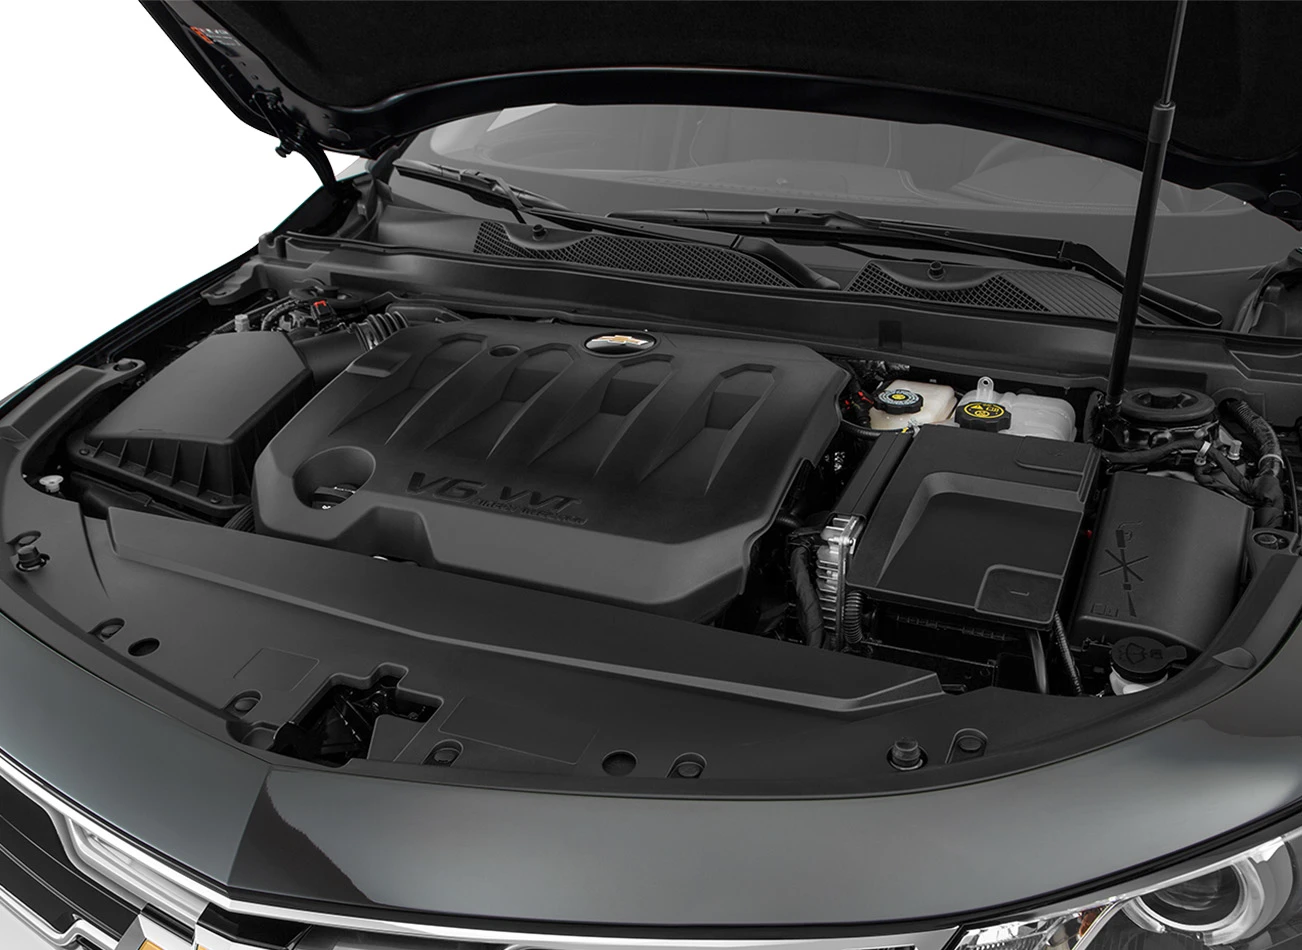 2020 Chevrolet Impala Review: Engine | CarMax